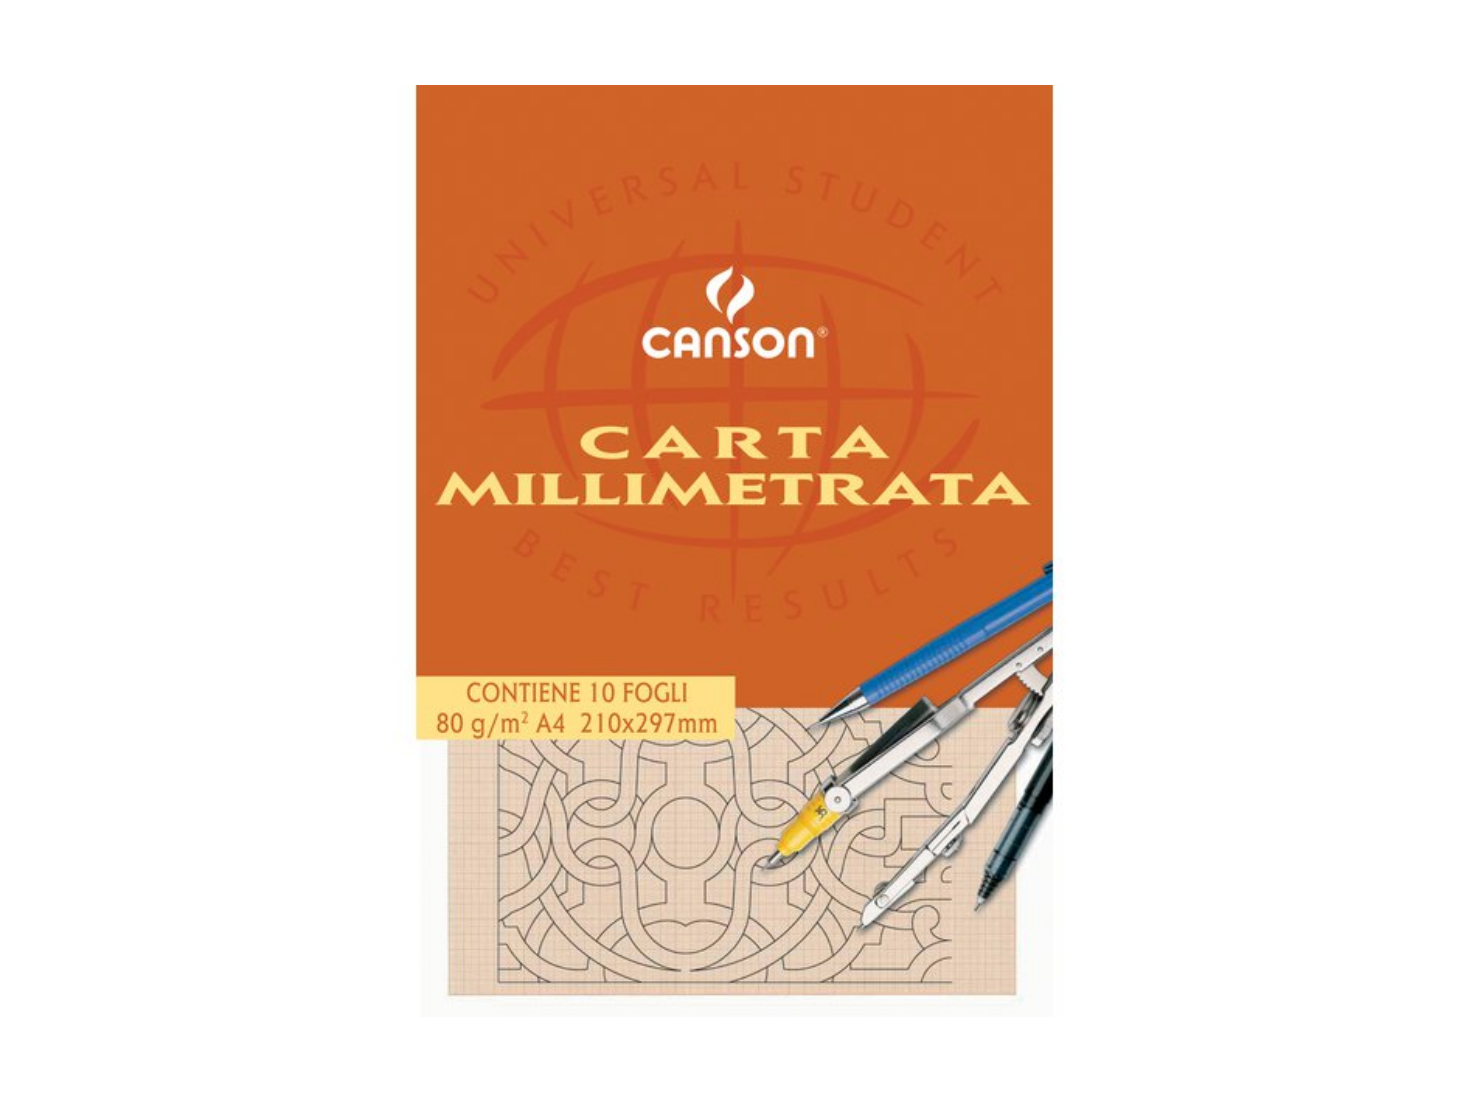 Canson Carta millimetrata